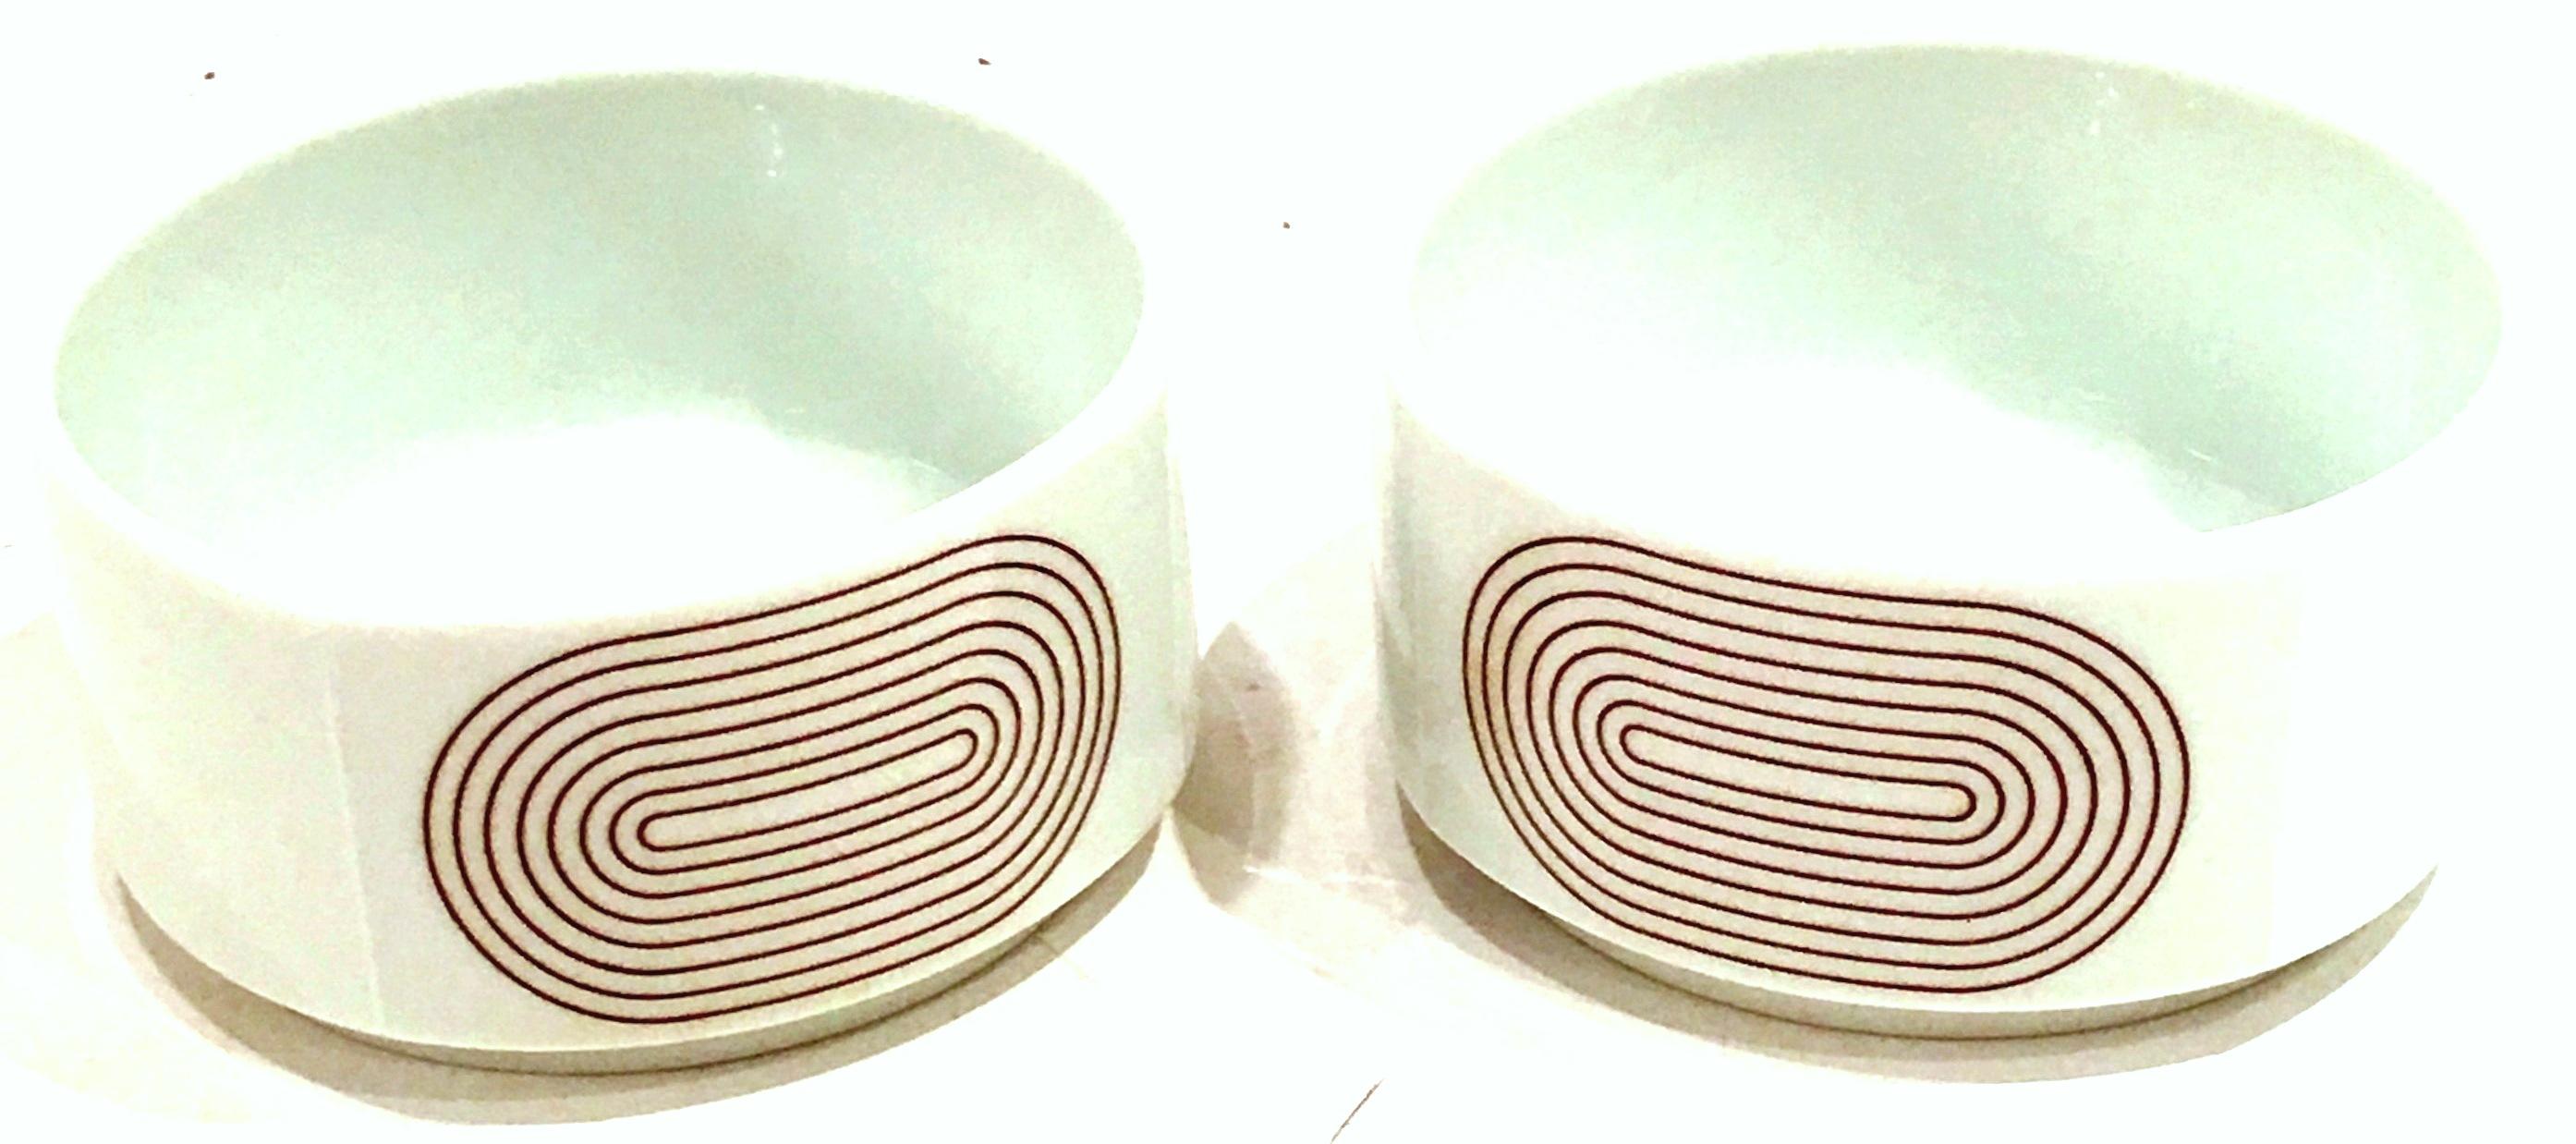 1970s dinnerware patterns